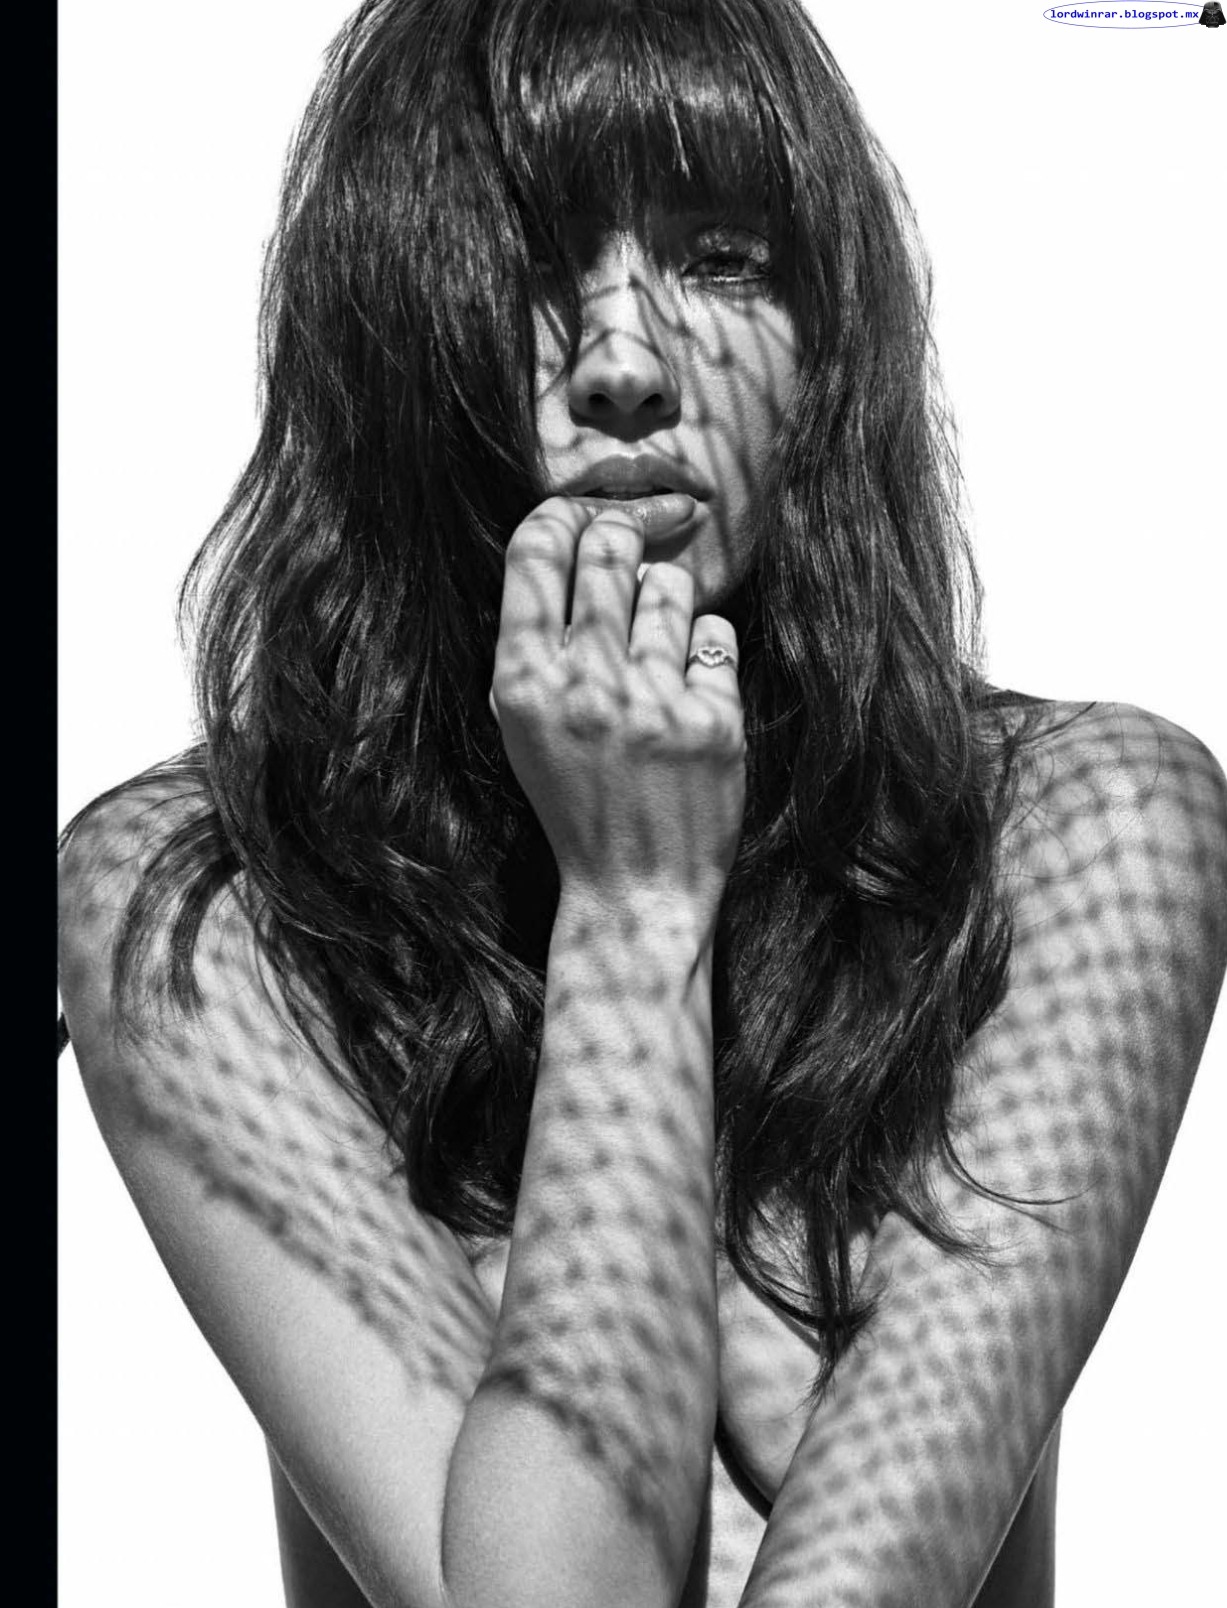   Gaby Espino - Maxim Mexico 2016 Noviembre (34 Fotos HQ)Gaby Espino semi desnuda